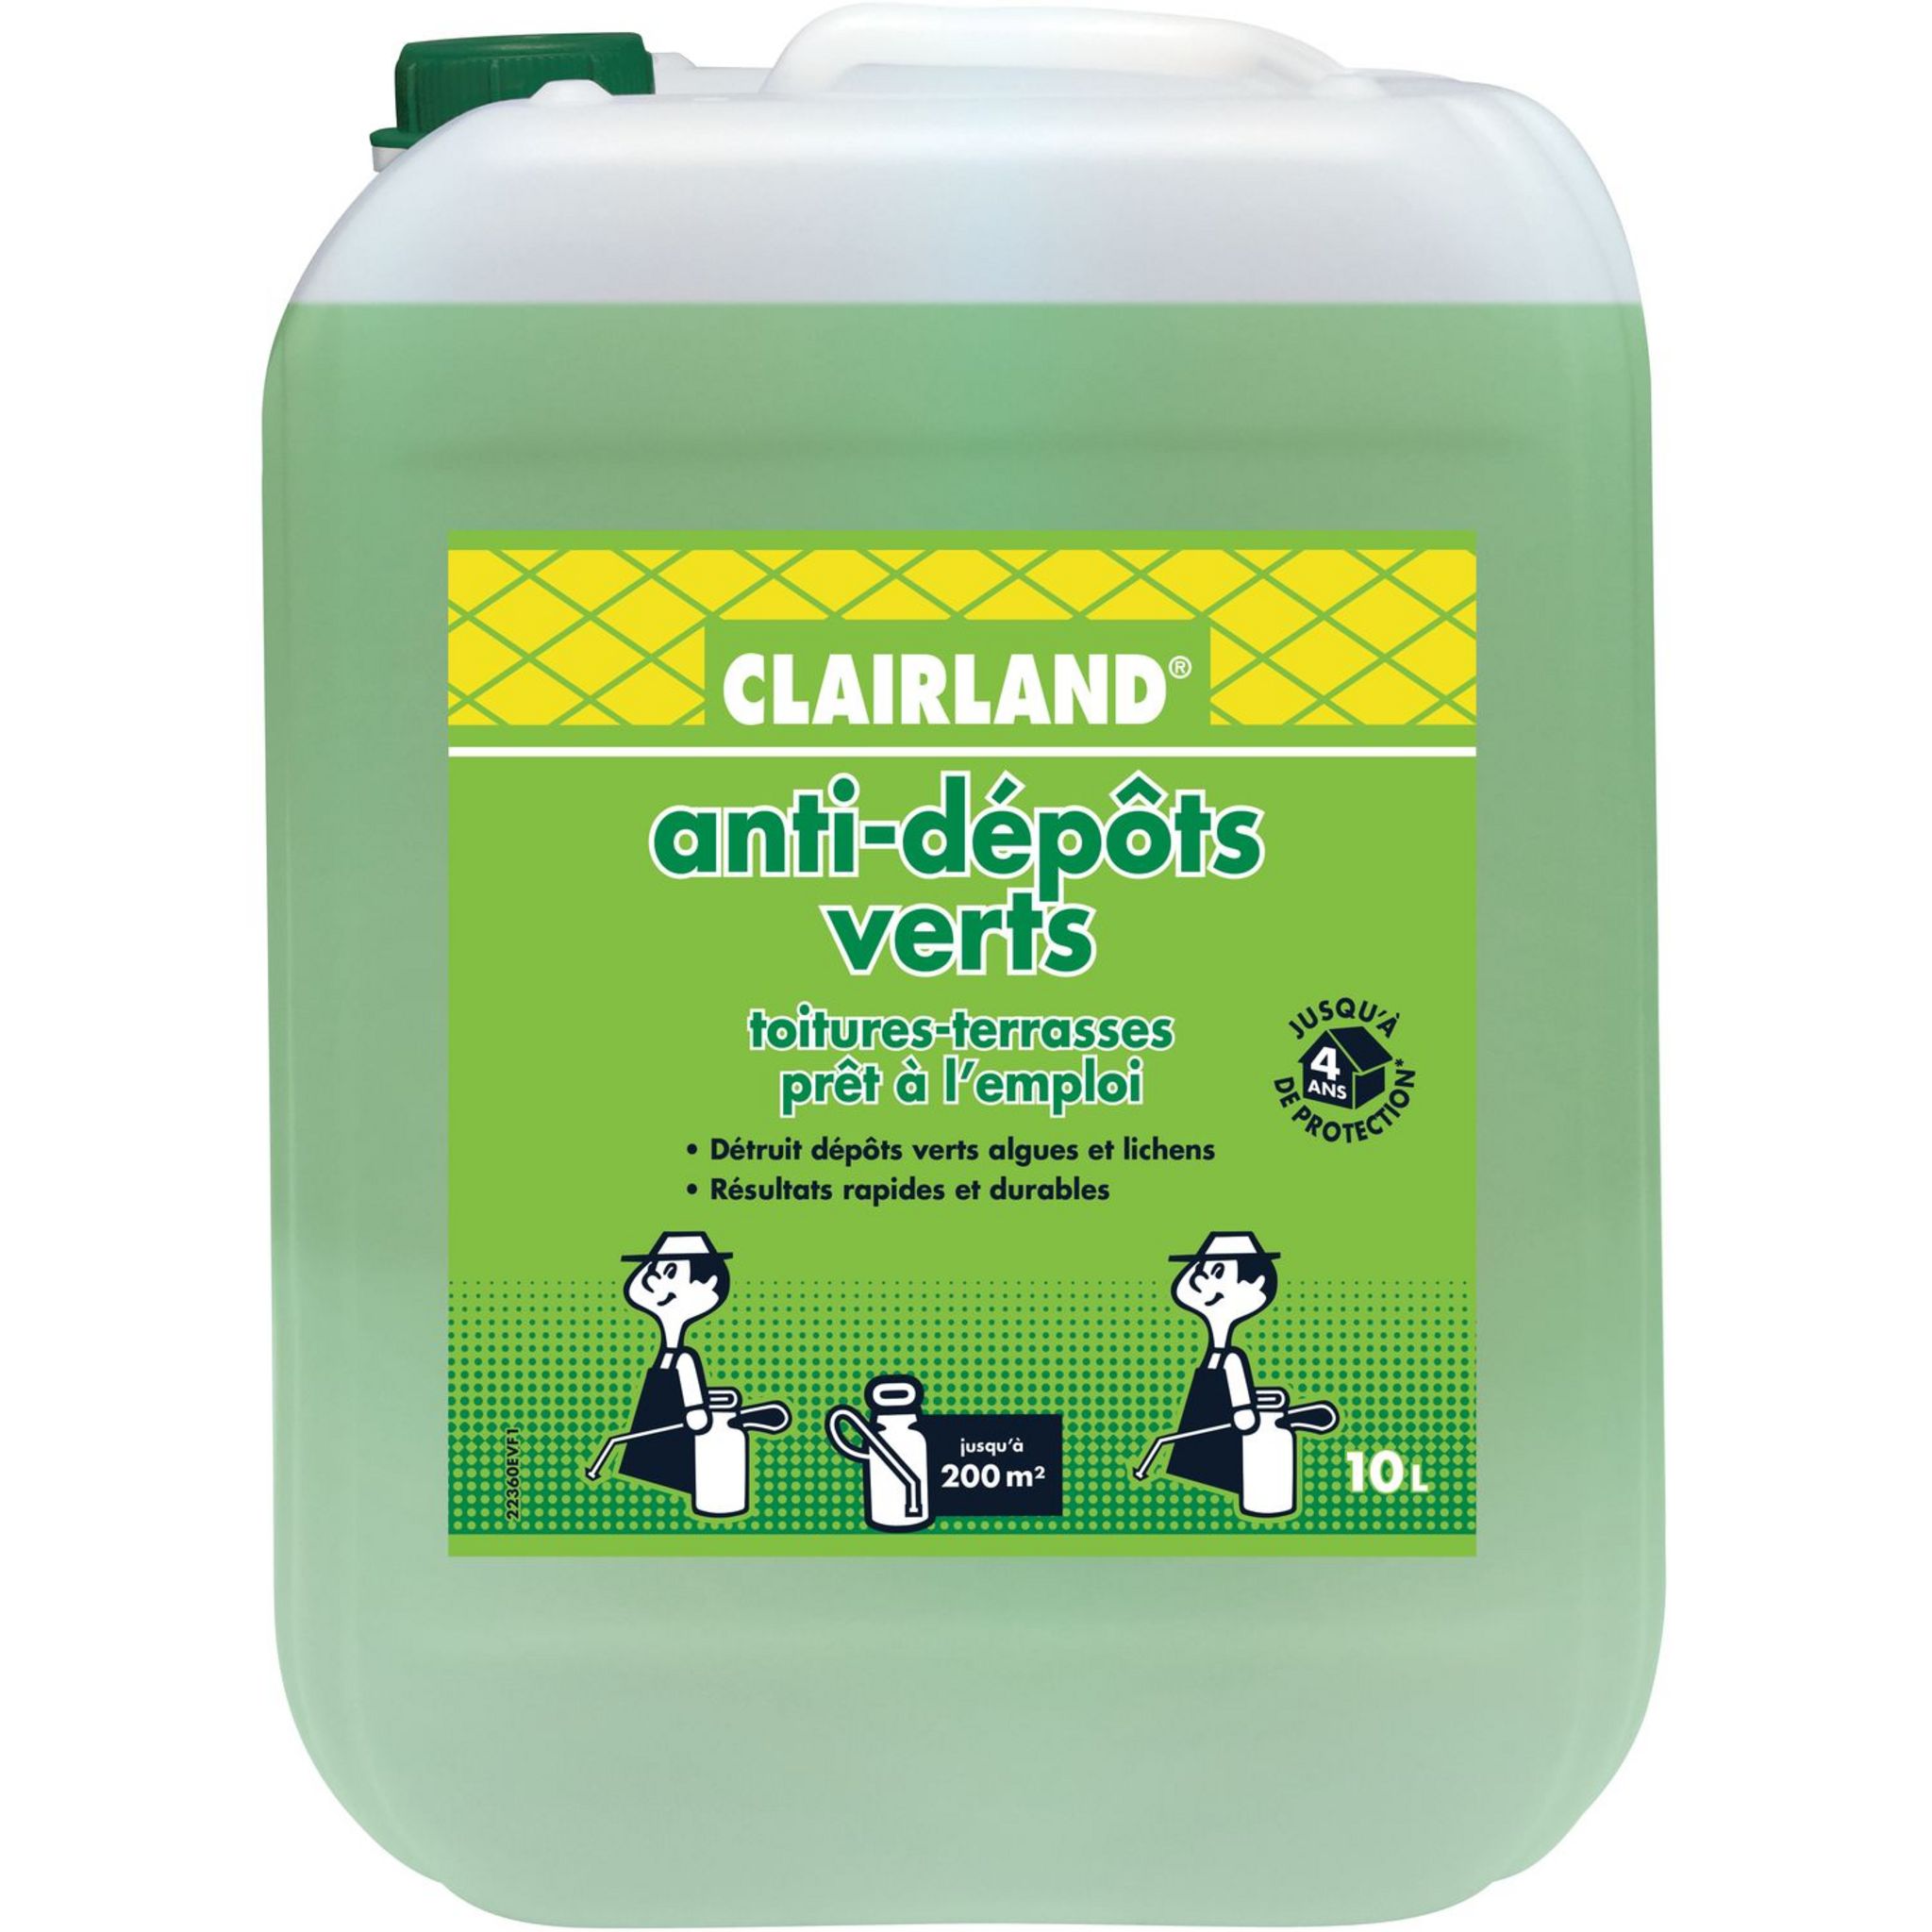 Clairland - Anti-mousse Allées Terrasses - Bio 1 L - Gamm vert